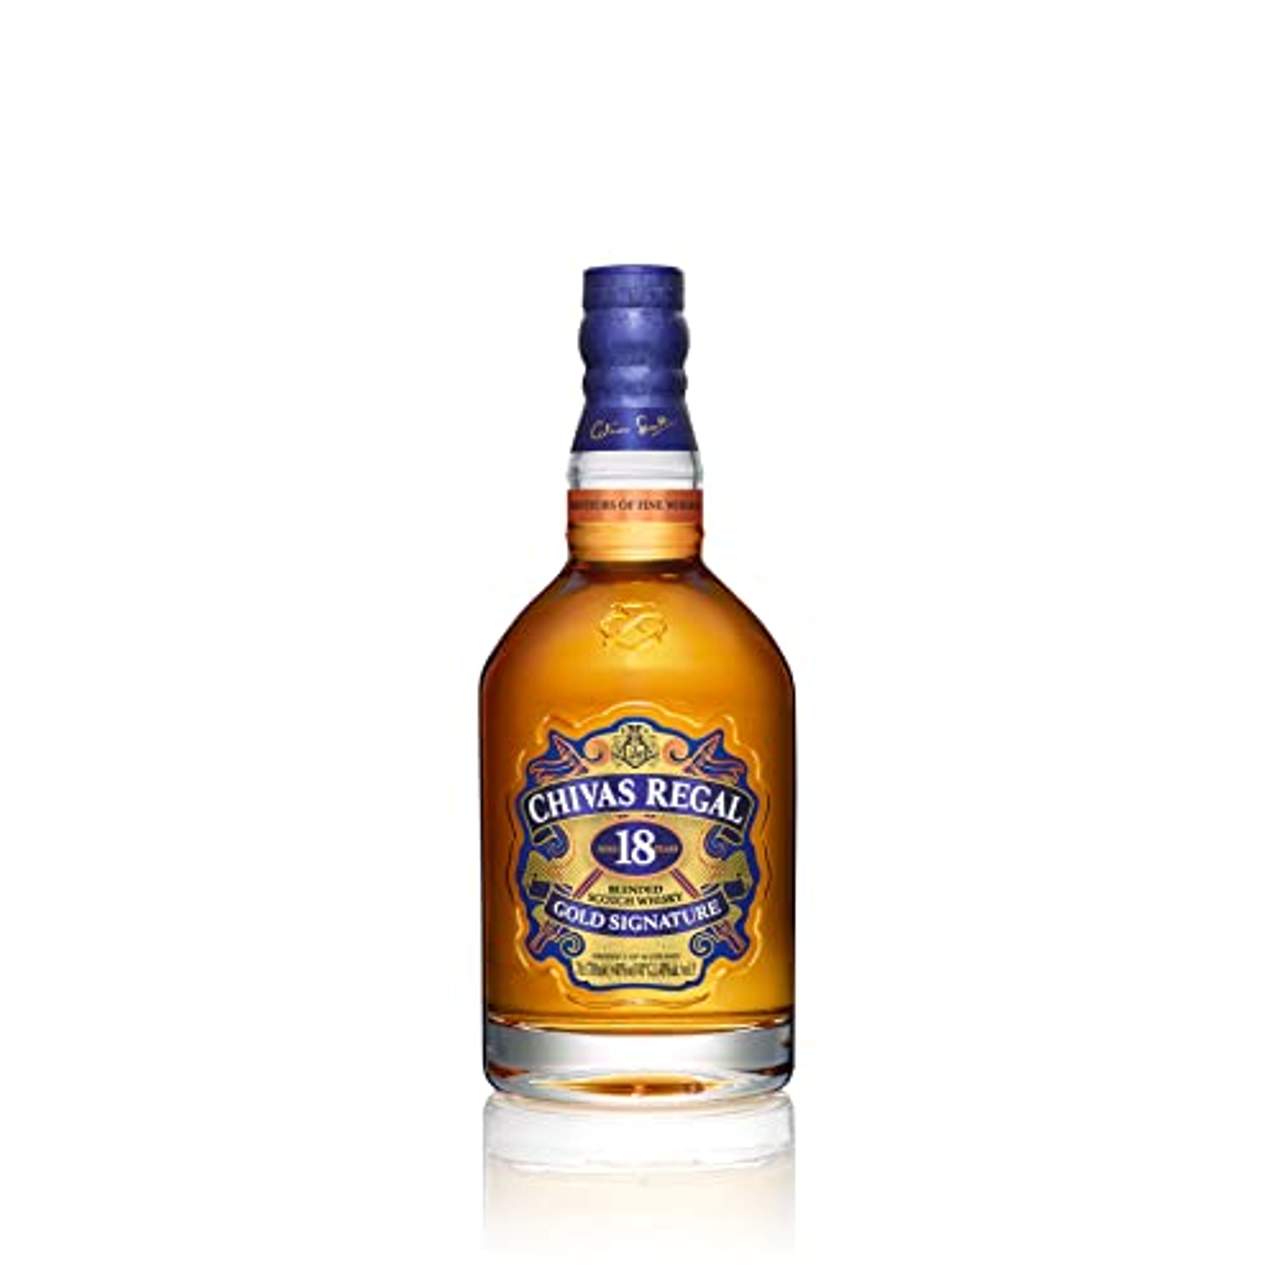 Chivas Regal 18 Jahre Gold Signature Blended Scotch Whisky